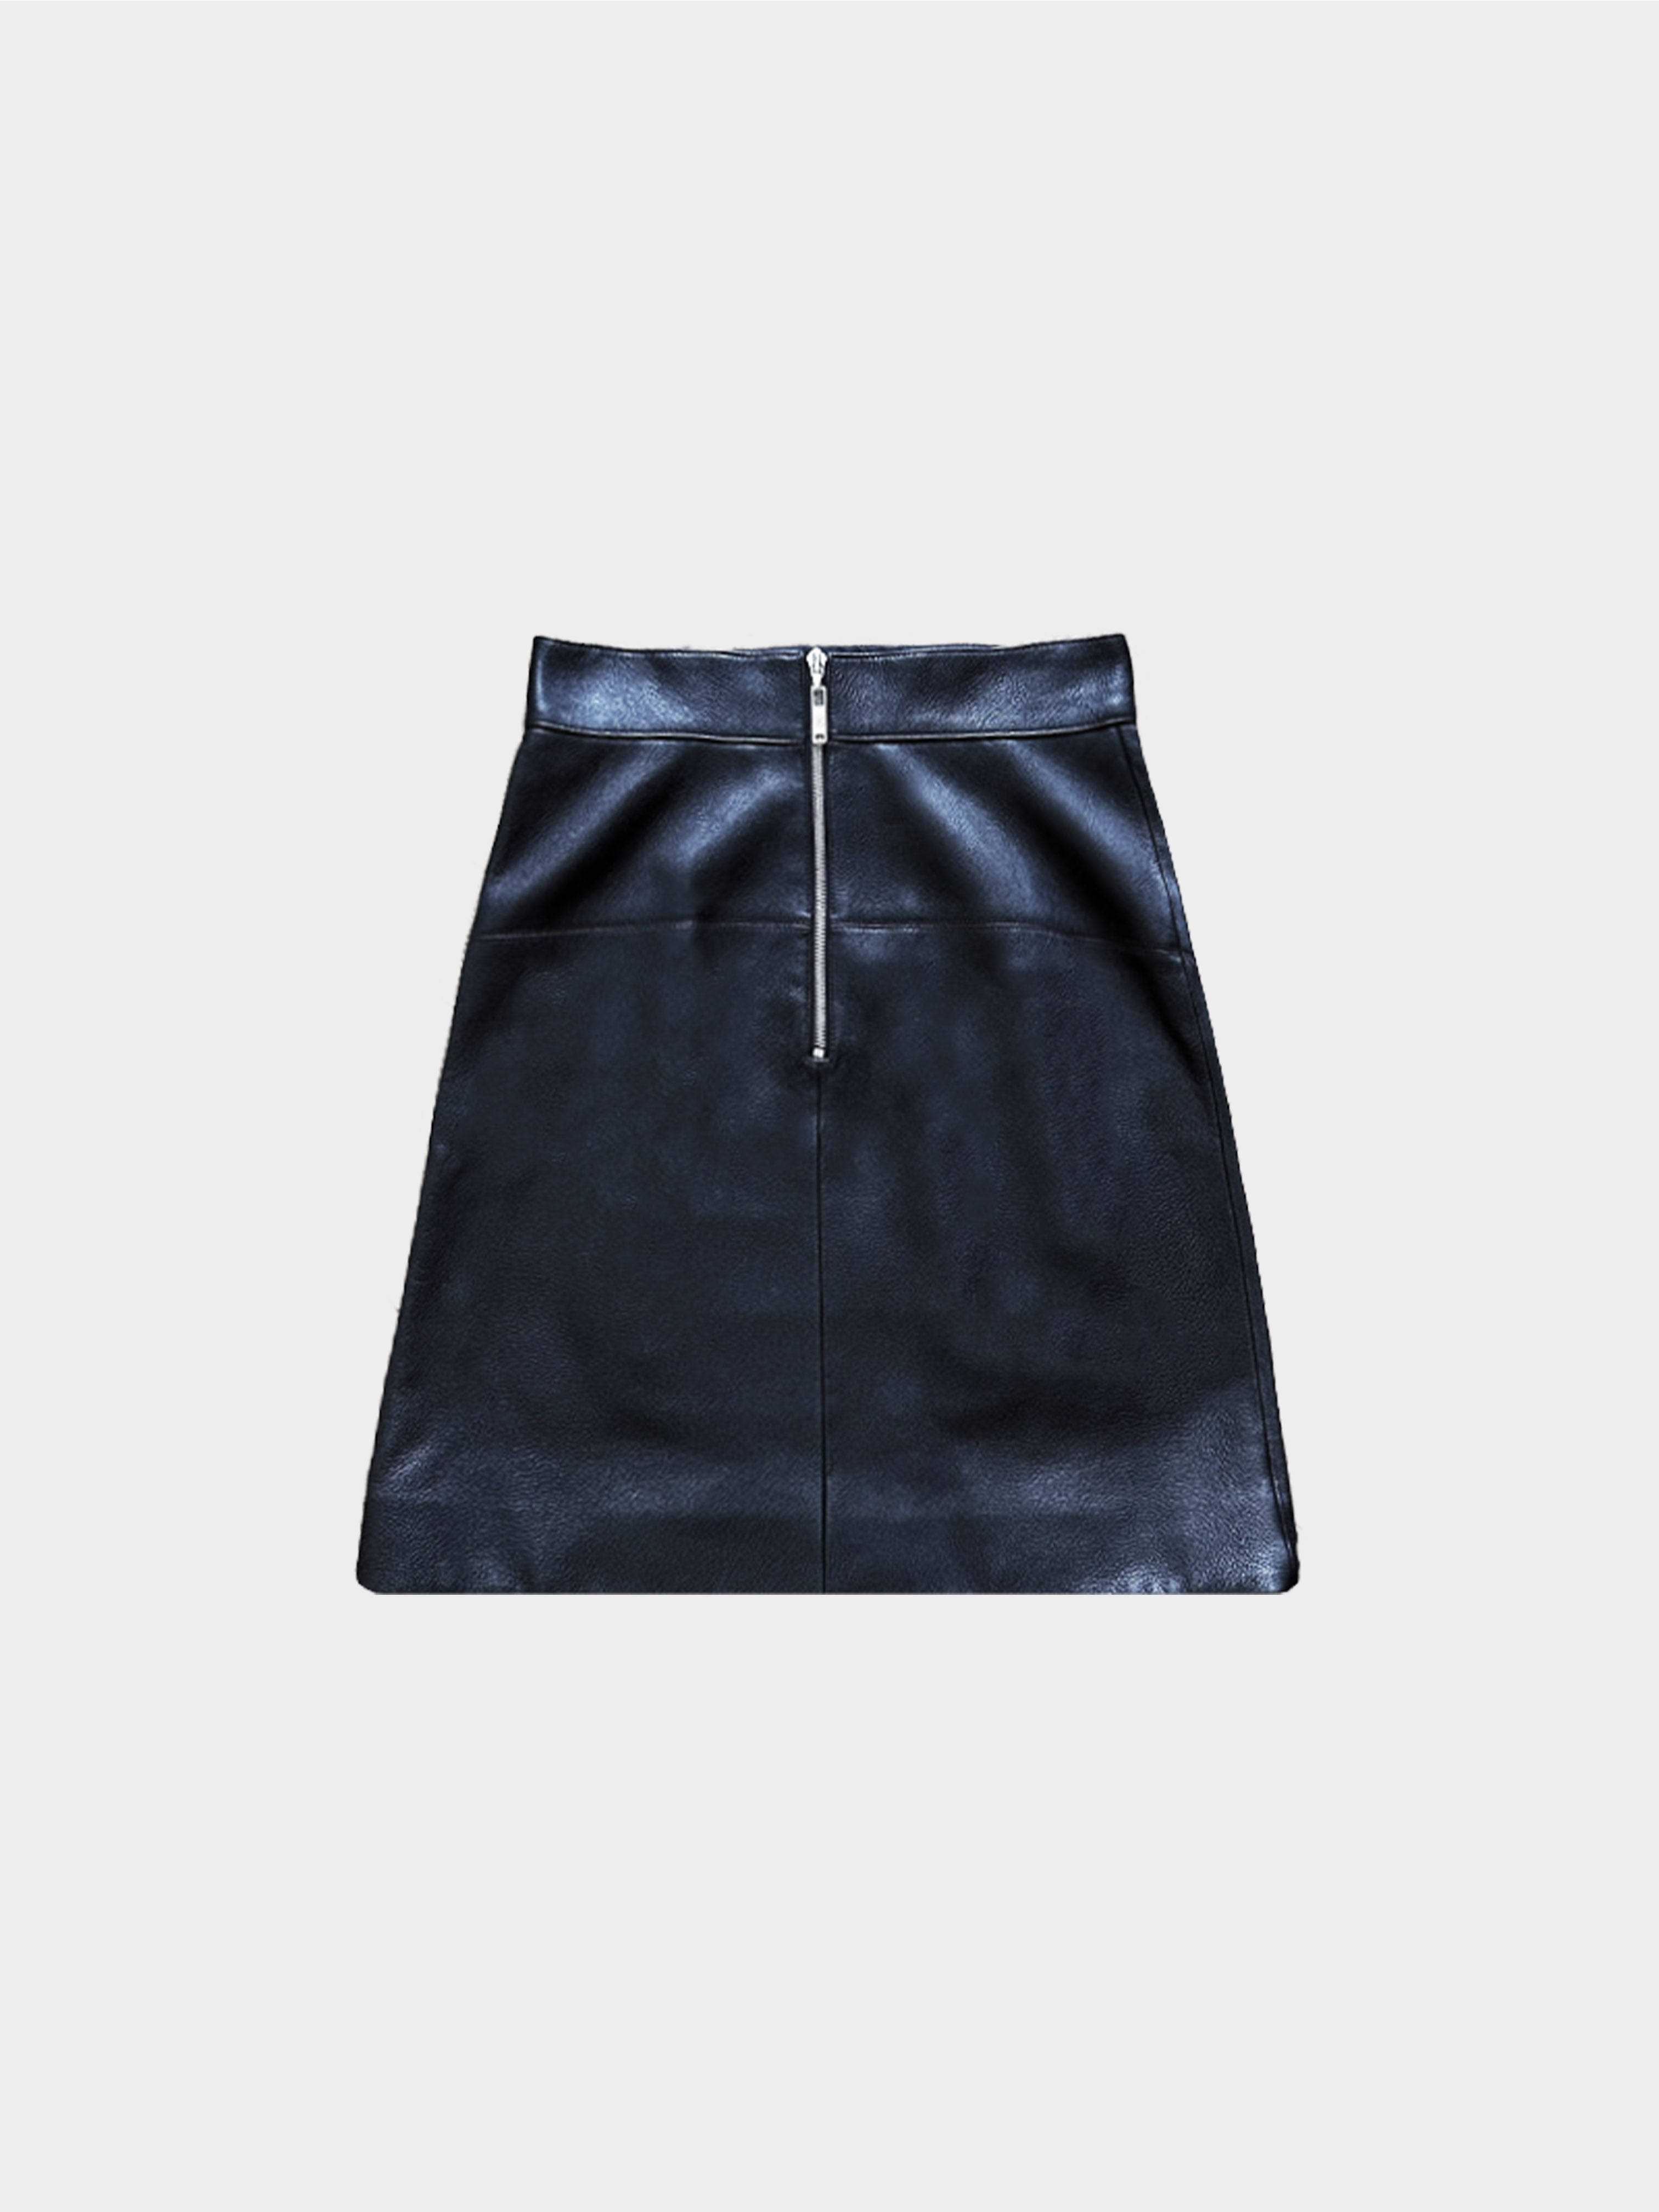 Louis Vuitton 2010s Black Leather Prototype Paneled Skirt